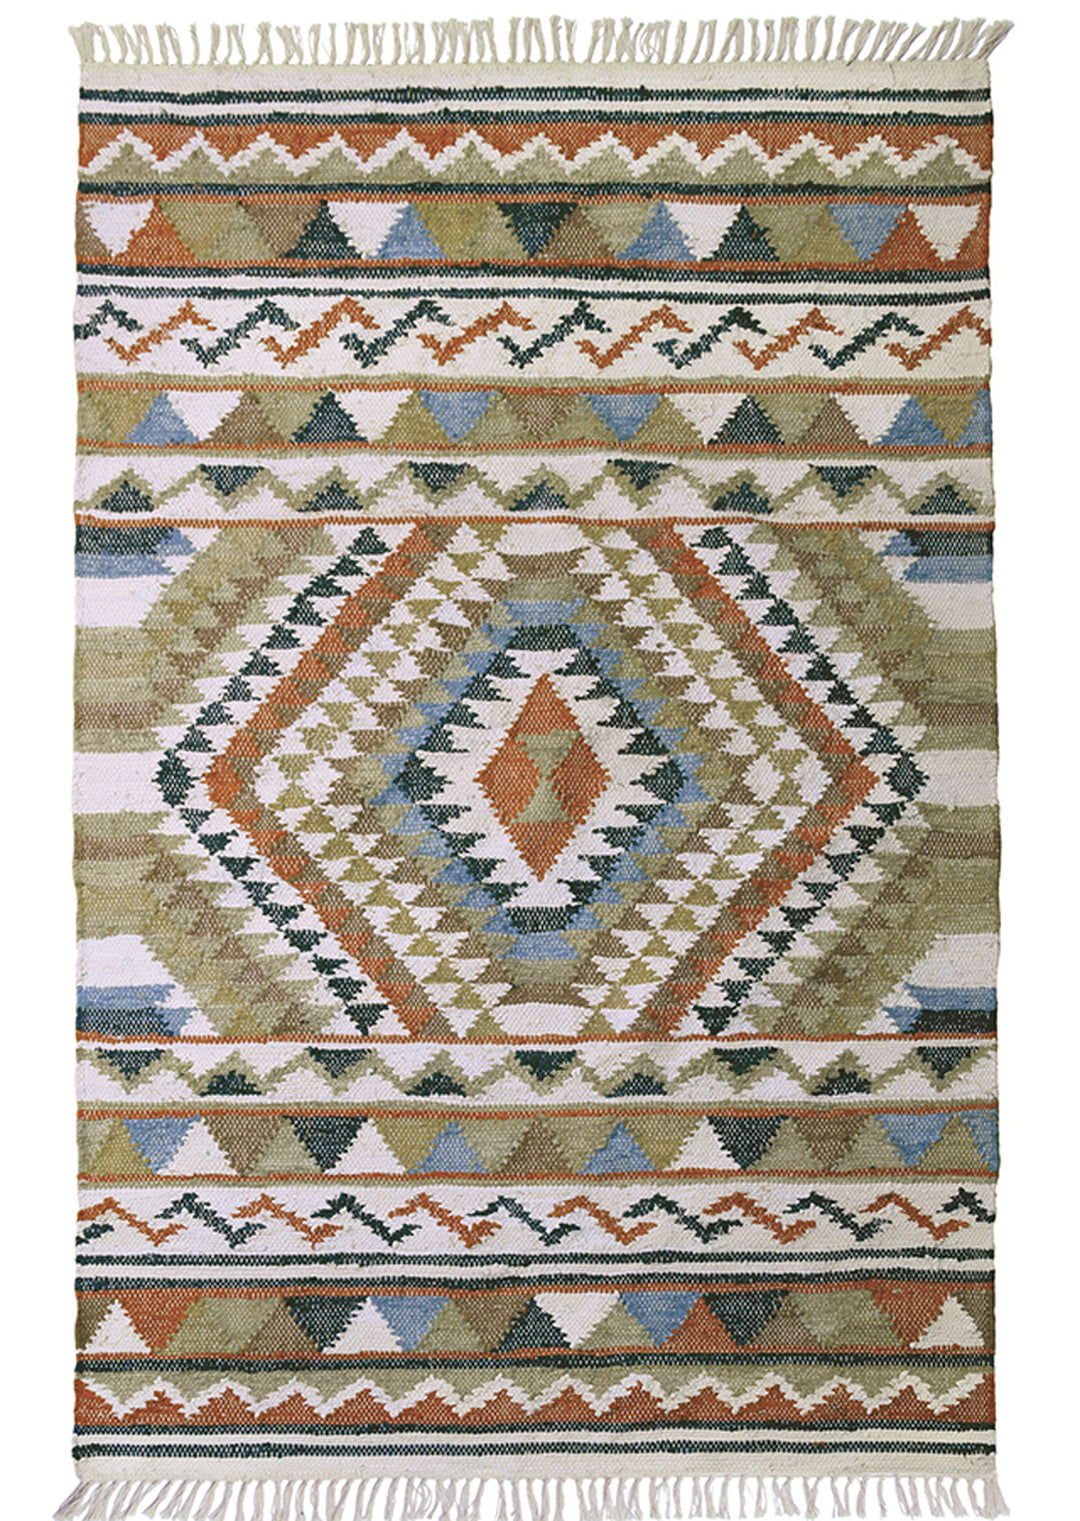 Indian Panja Loom Cotton Blue And Brown Geometric Kilim Rug 75 cm x 135 cm